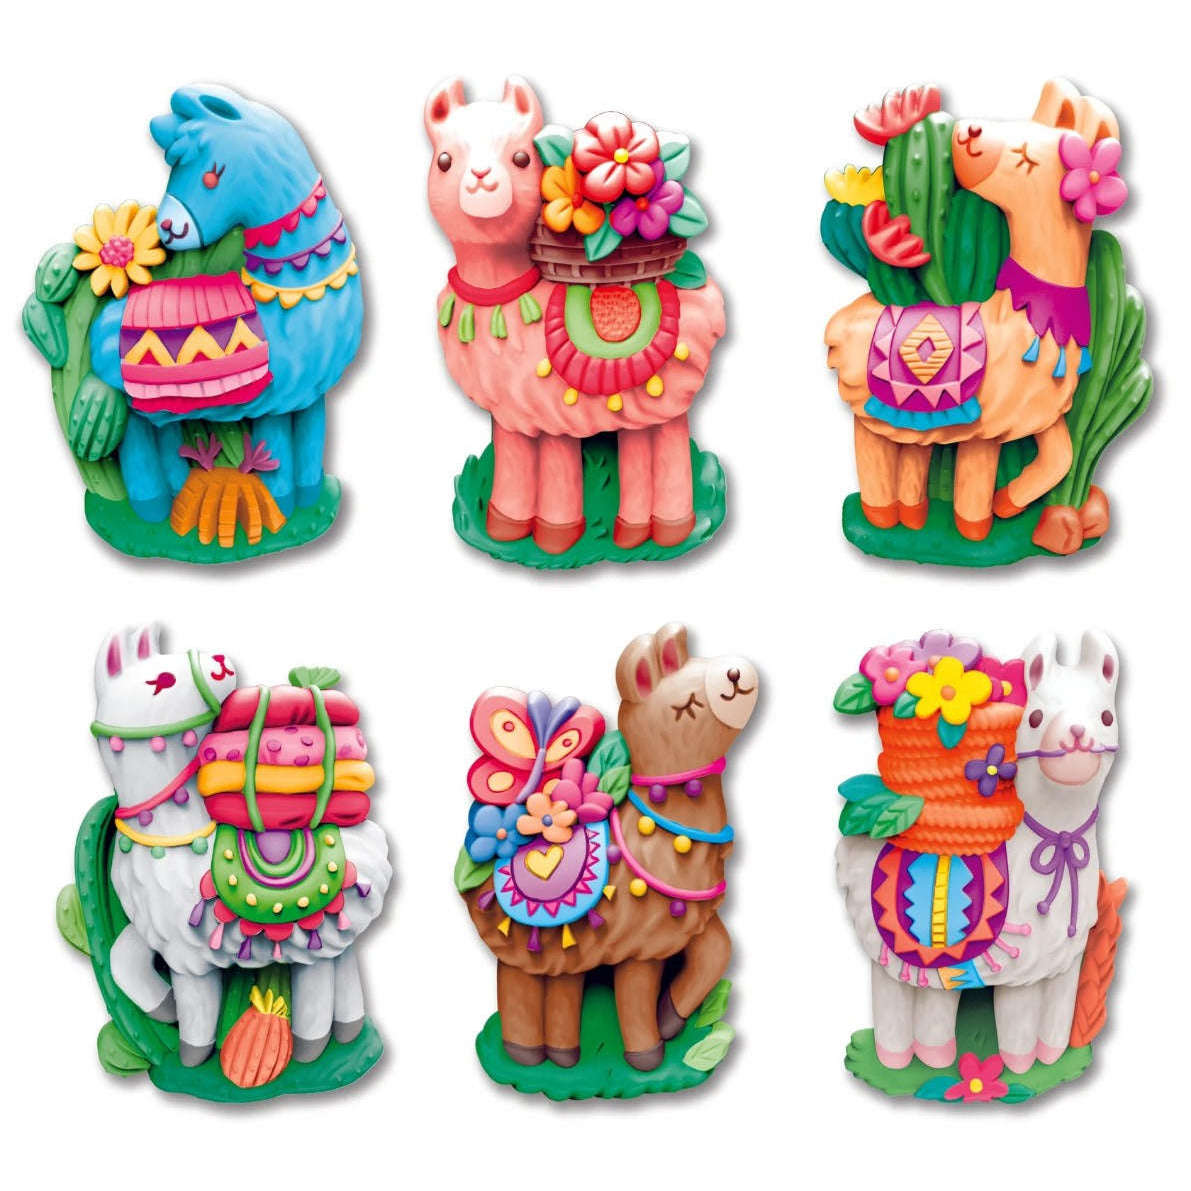 Toys N Tuck:4M Mould & Paint Llama,Kidzlabs